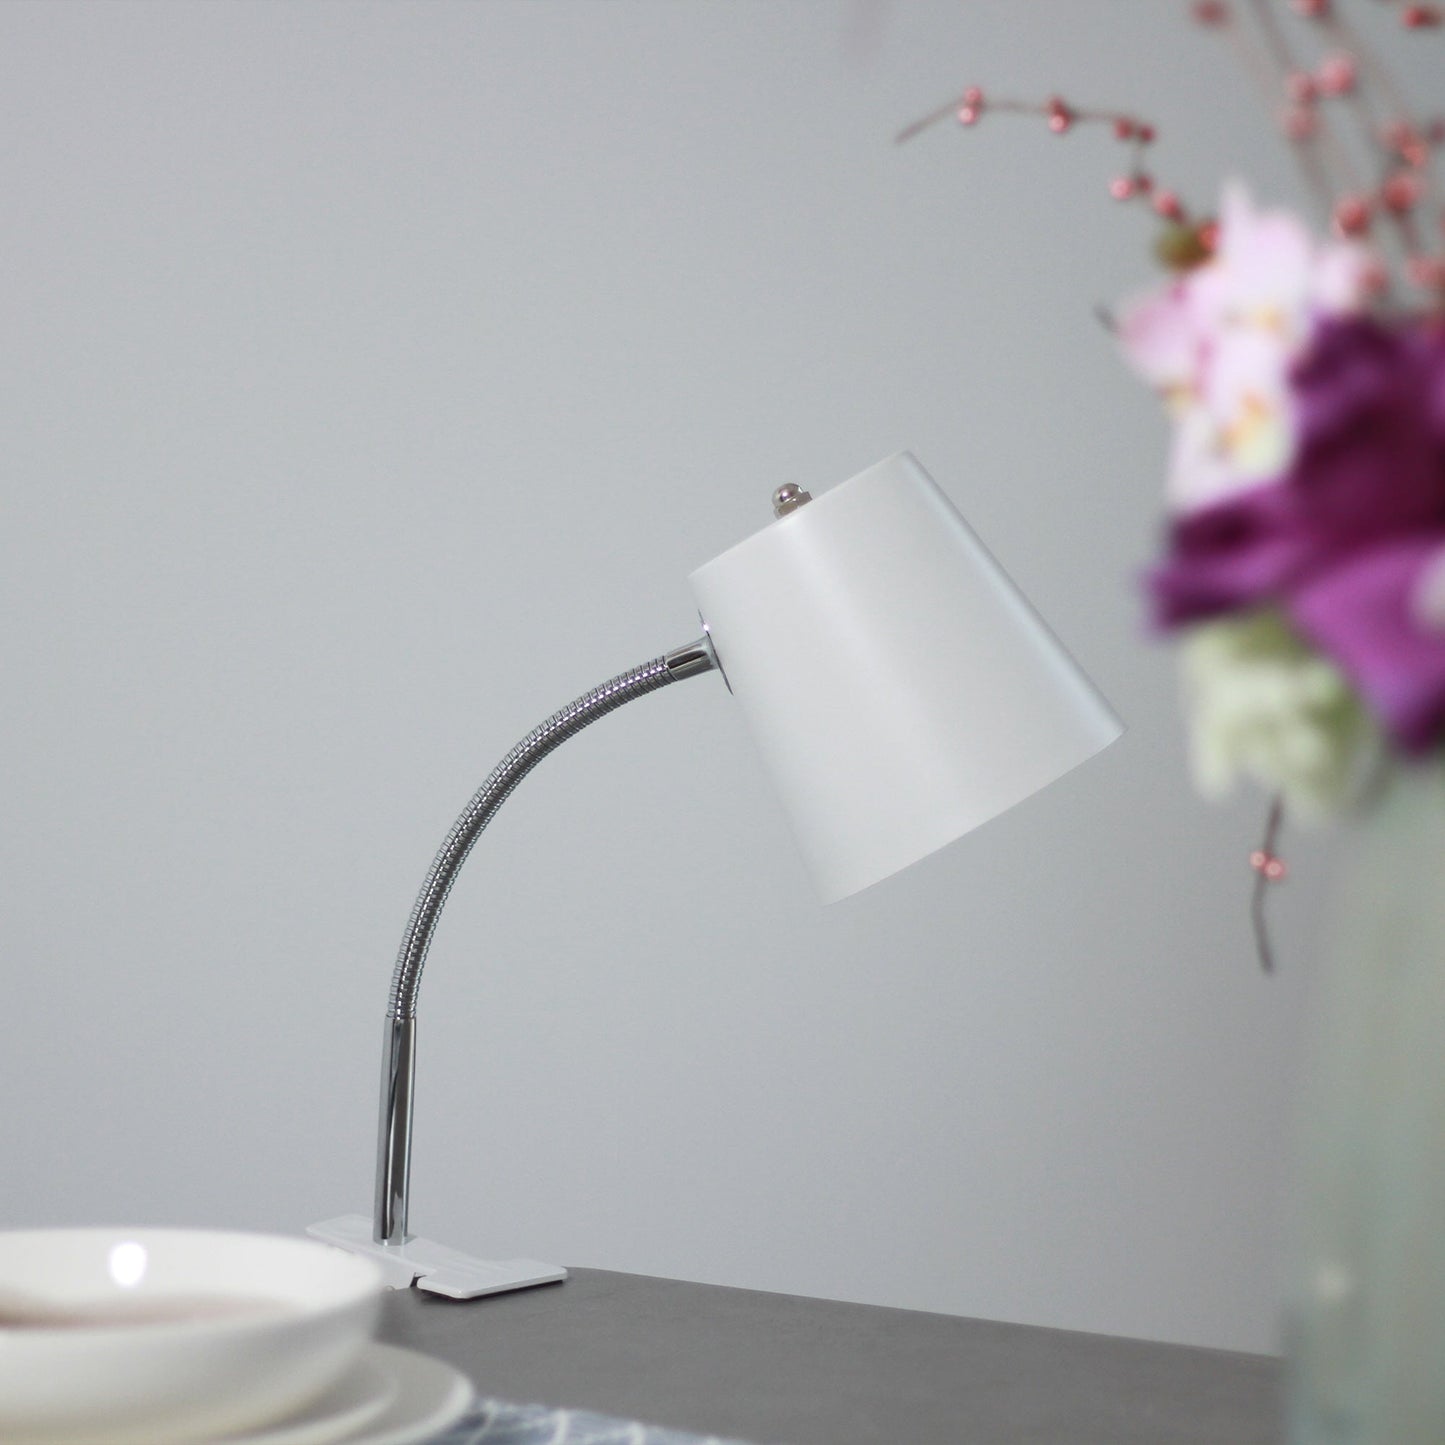 Stylish Cone Shape Metal Table Lamp - White